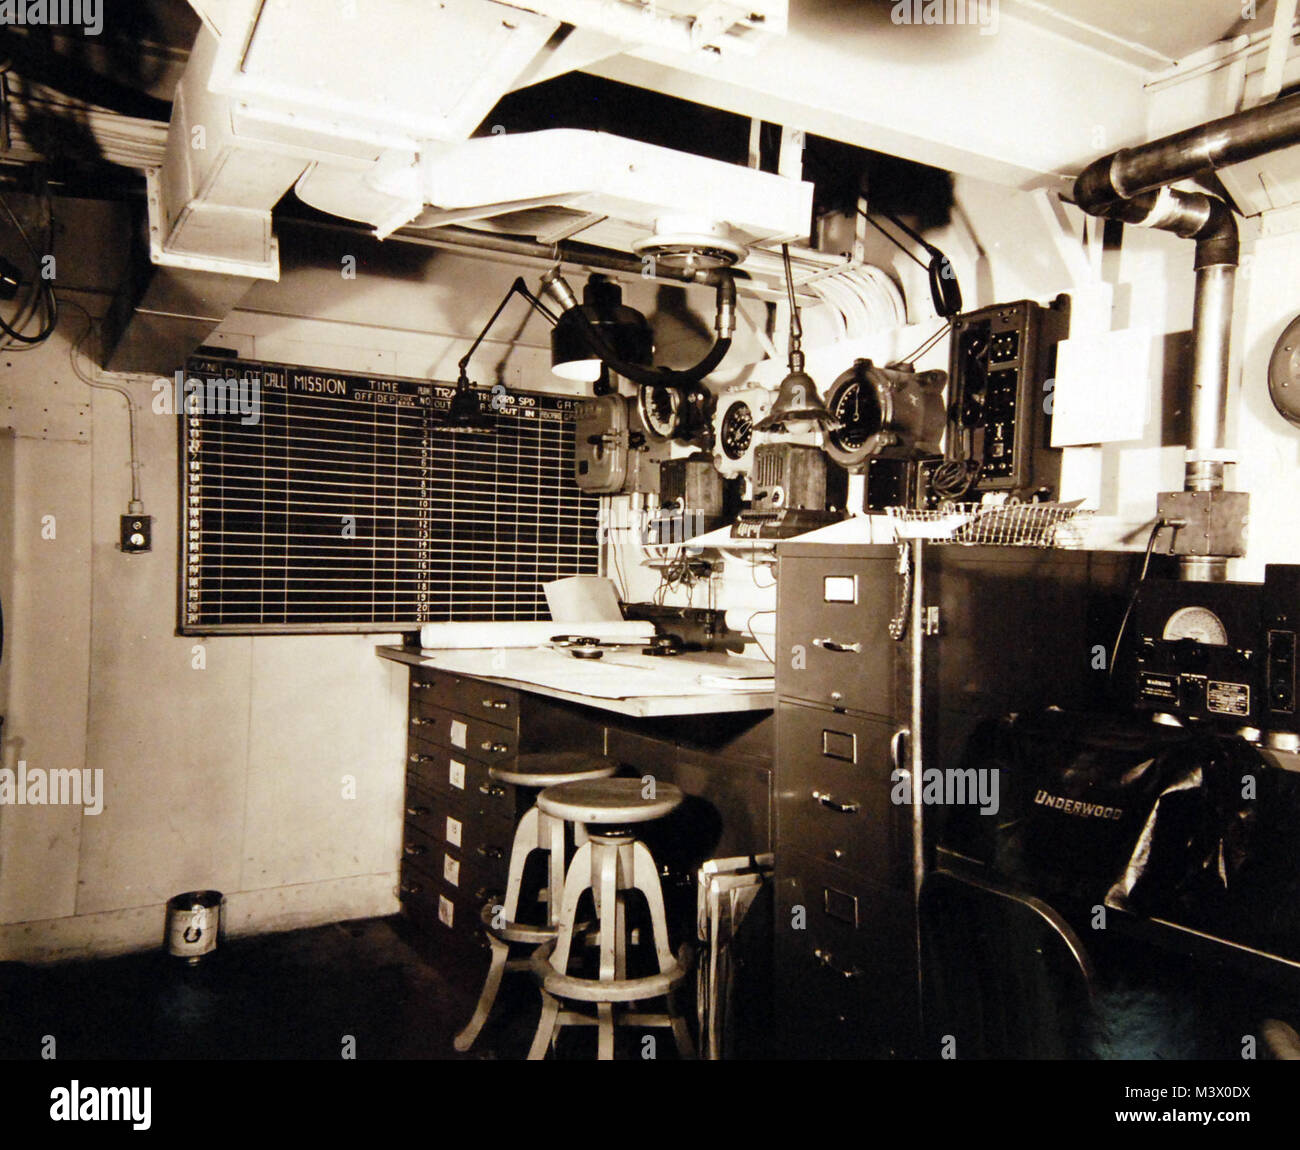 80-G--366263: USS-Karte (CVE-11), Communications Intelligence Center (CIC) onboard, 5. März 1943. Offizielle U.S. Navy Foto, jetzt in den Sammlungen der National Archives. (2018/01/31). 80-G--366263 39299410994 o Stockfoto